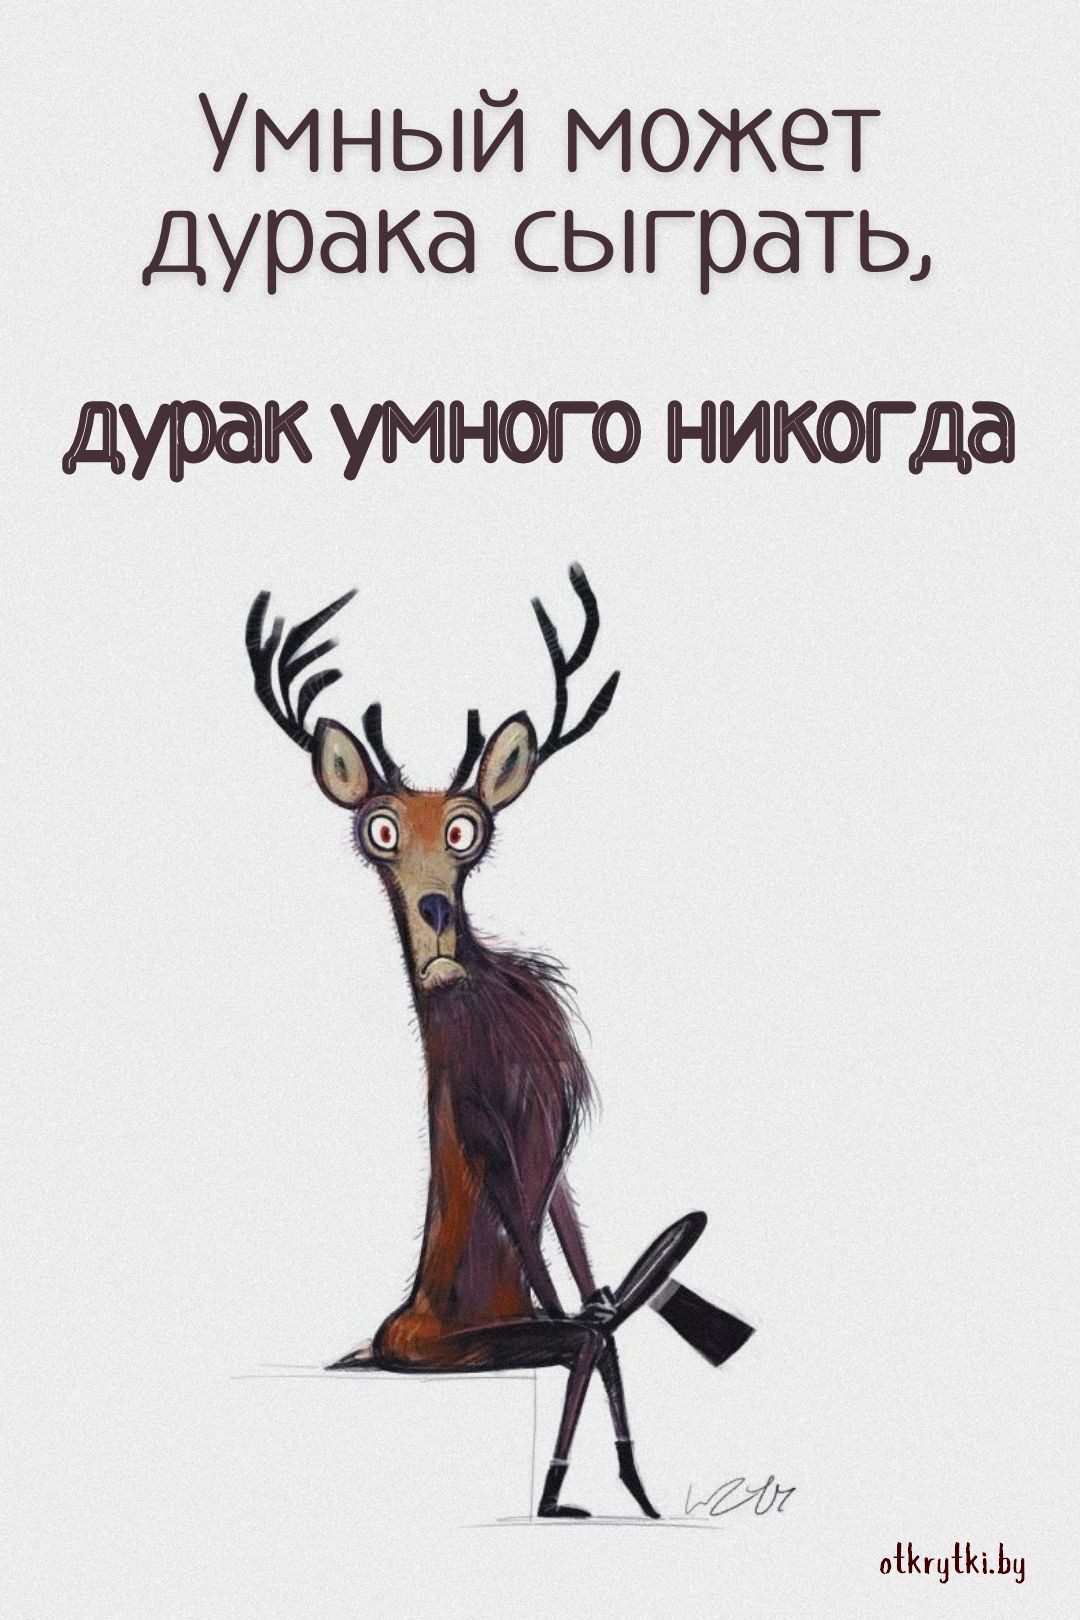 Коллекция открыток ПРО ДУРАКОВ с юмором